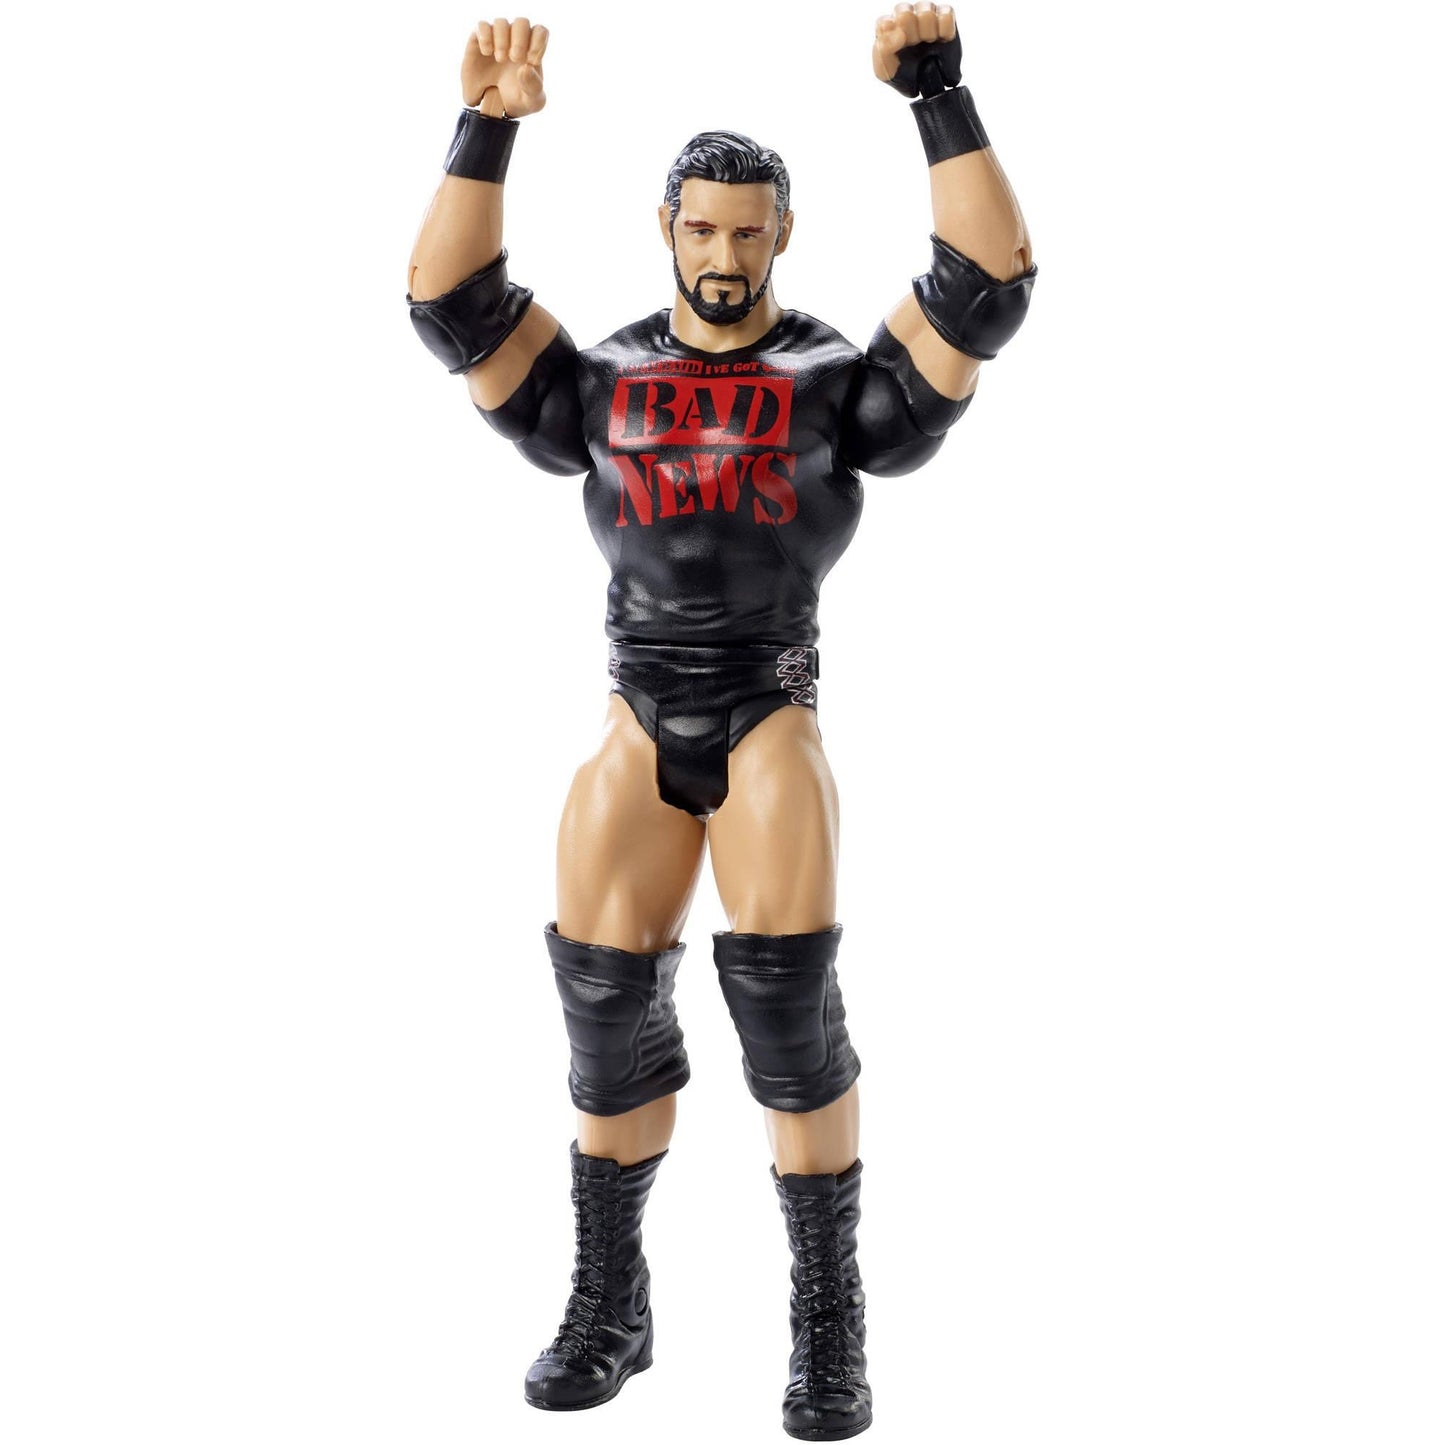 Bad News Barrett  - WWE Superstar Entrances Series Action Figure